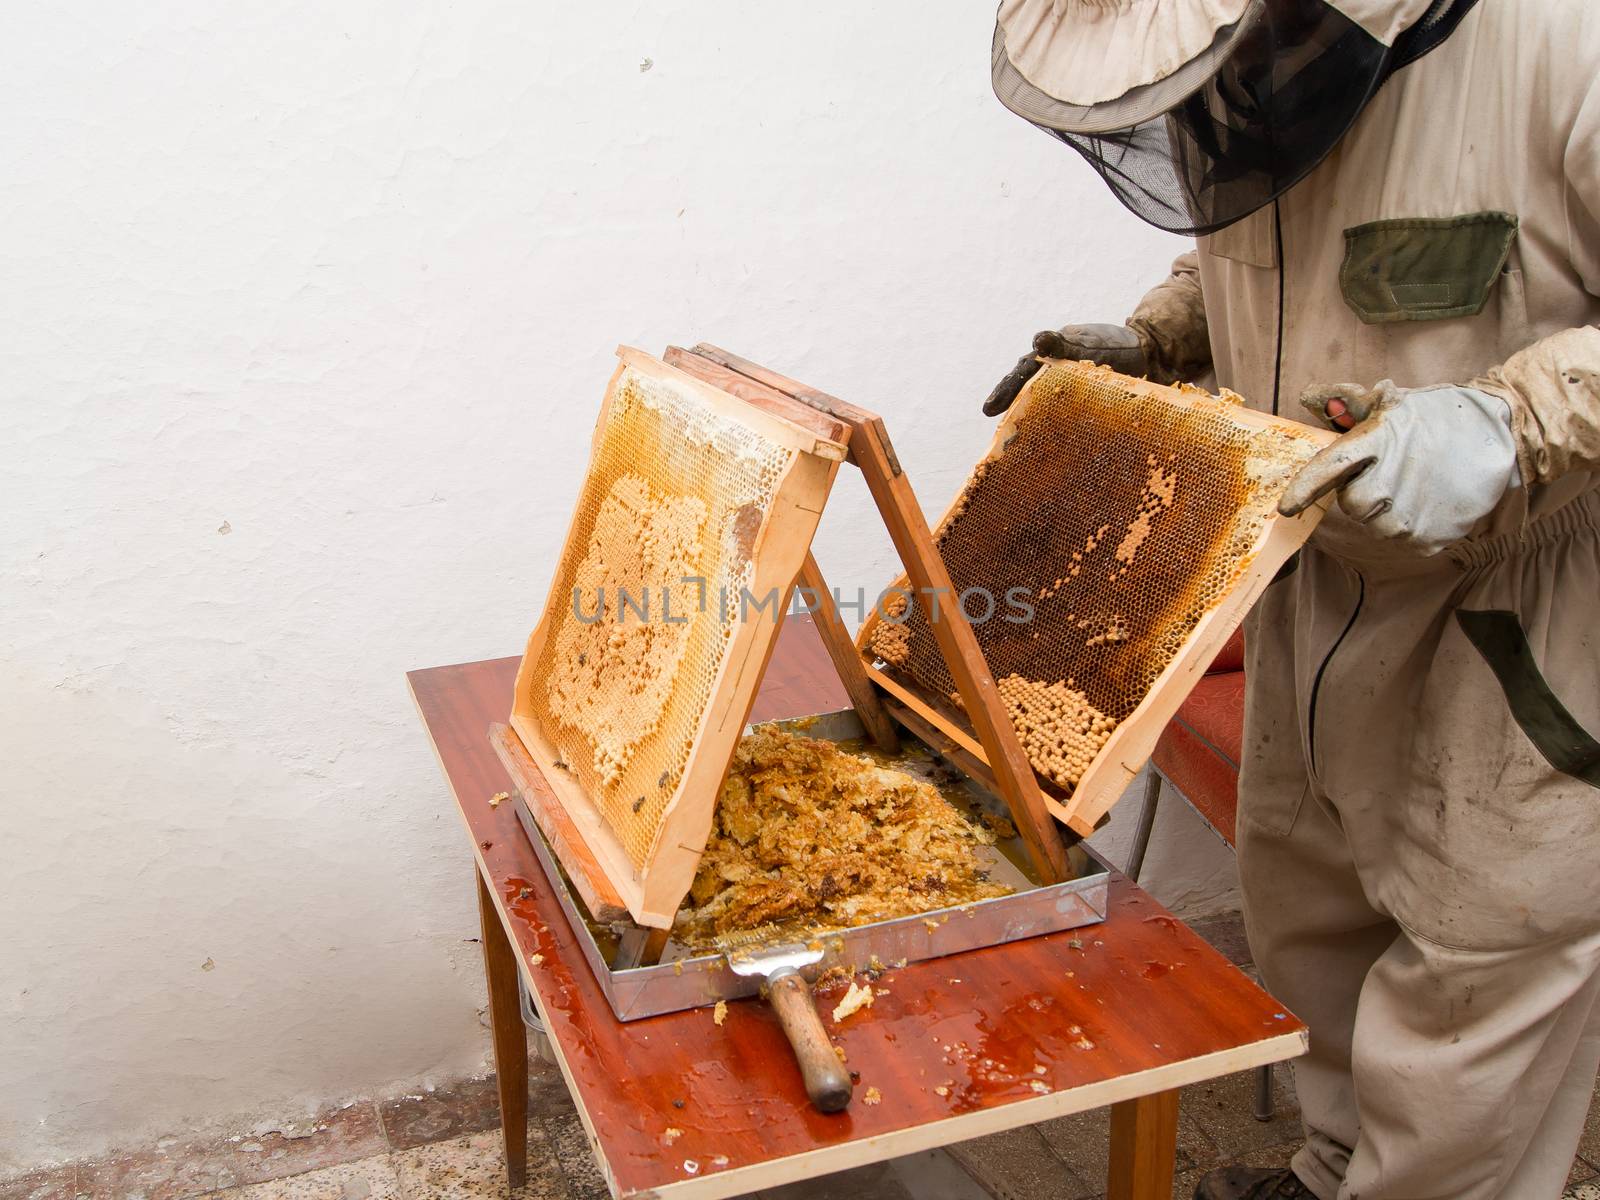 The beekeepers work. by dadalia